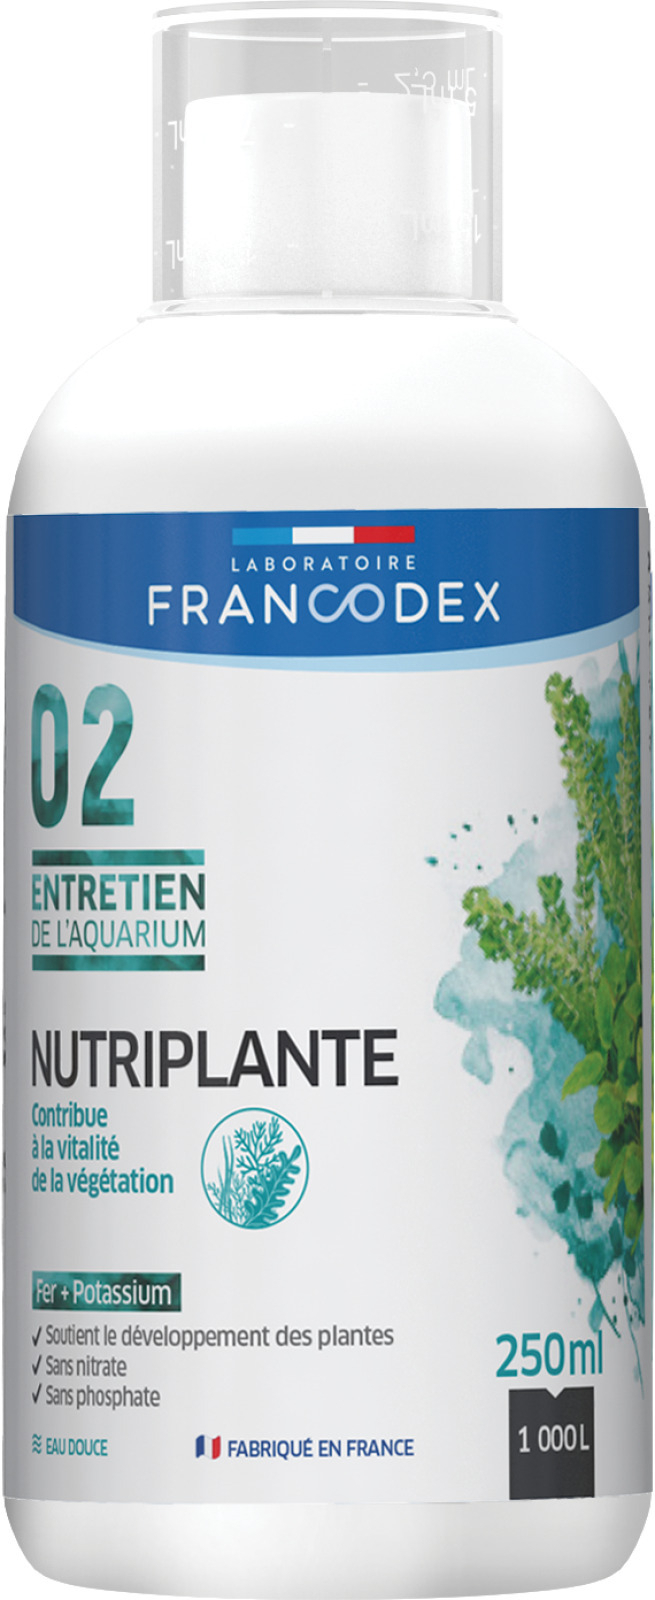 Nutriplant FRANCODEX